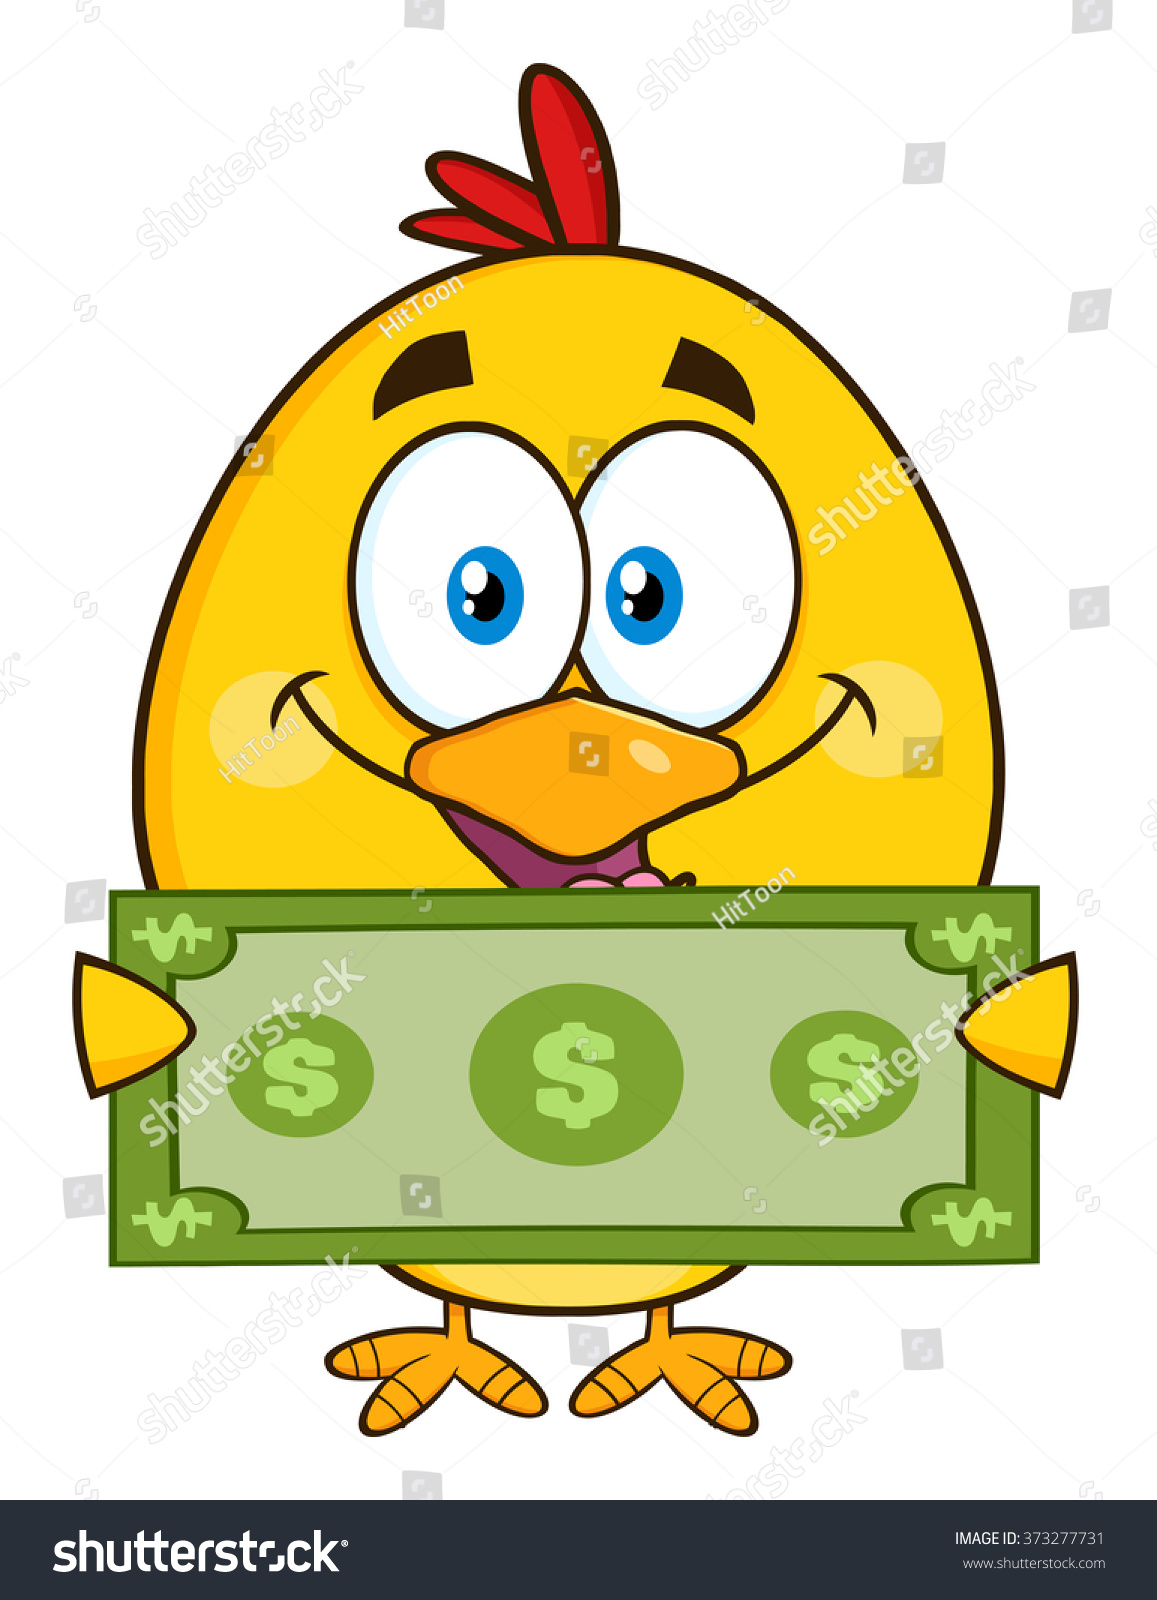 Chick Cash